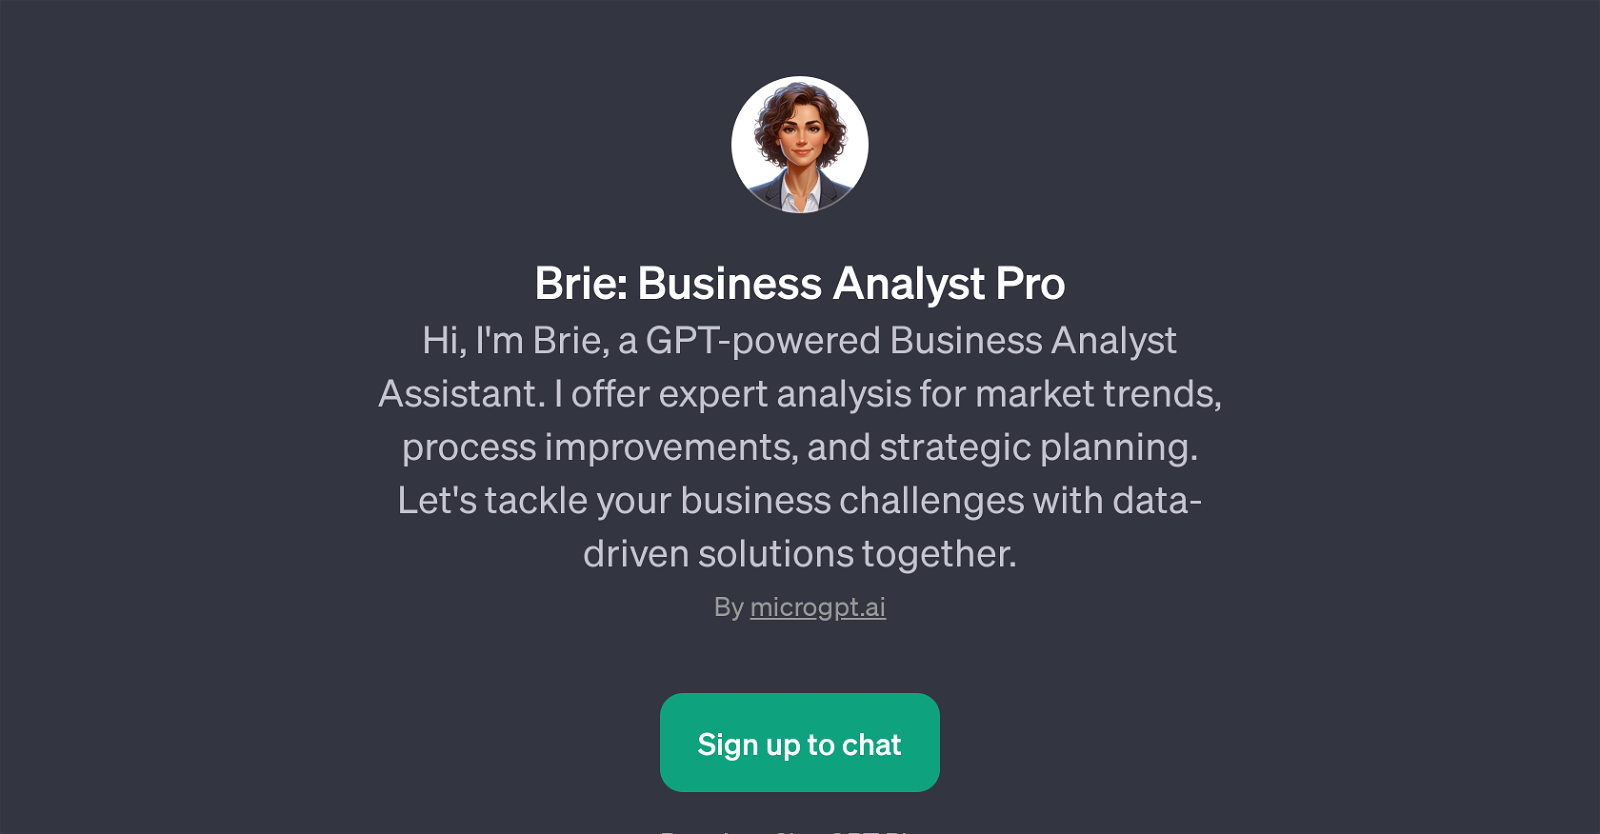 Brie: Business Analyst Pro website